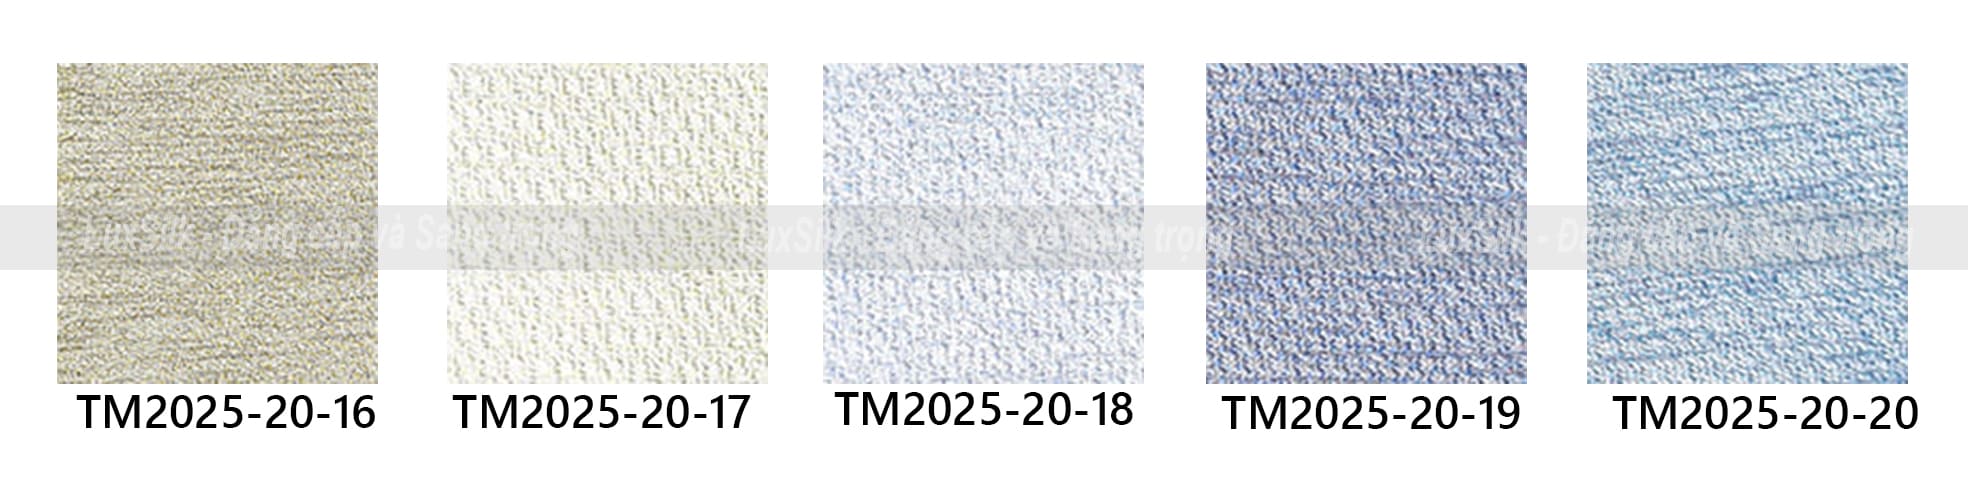 Rèm vải TM2025-20